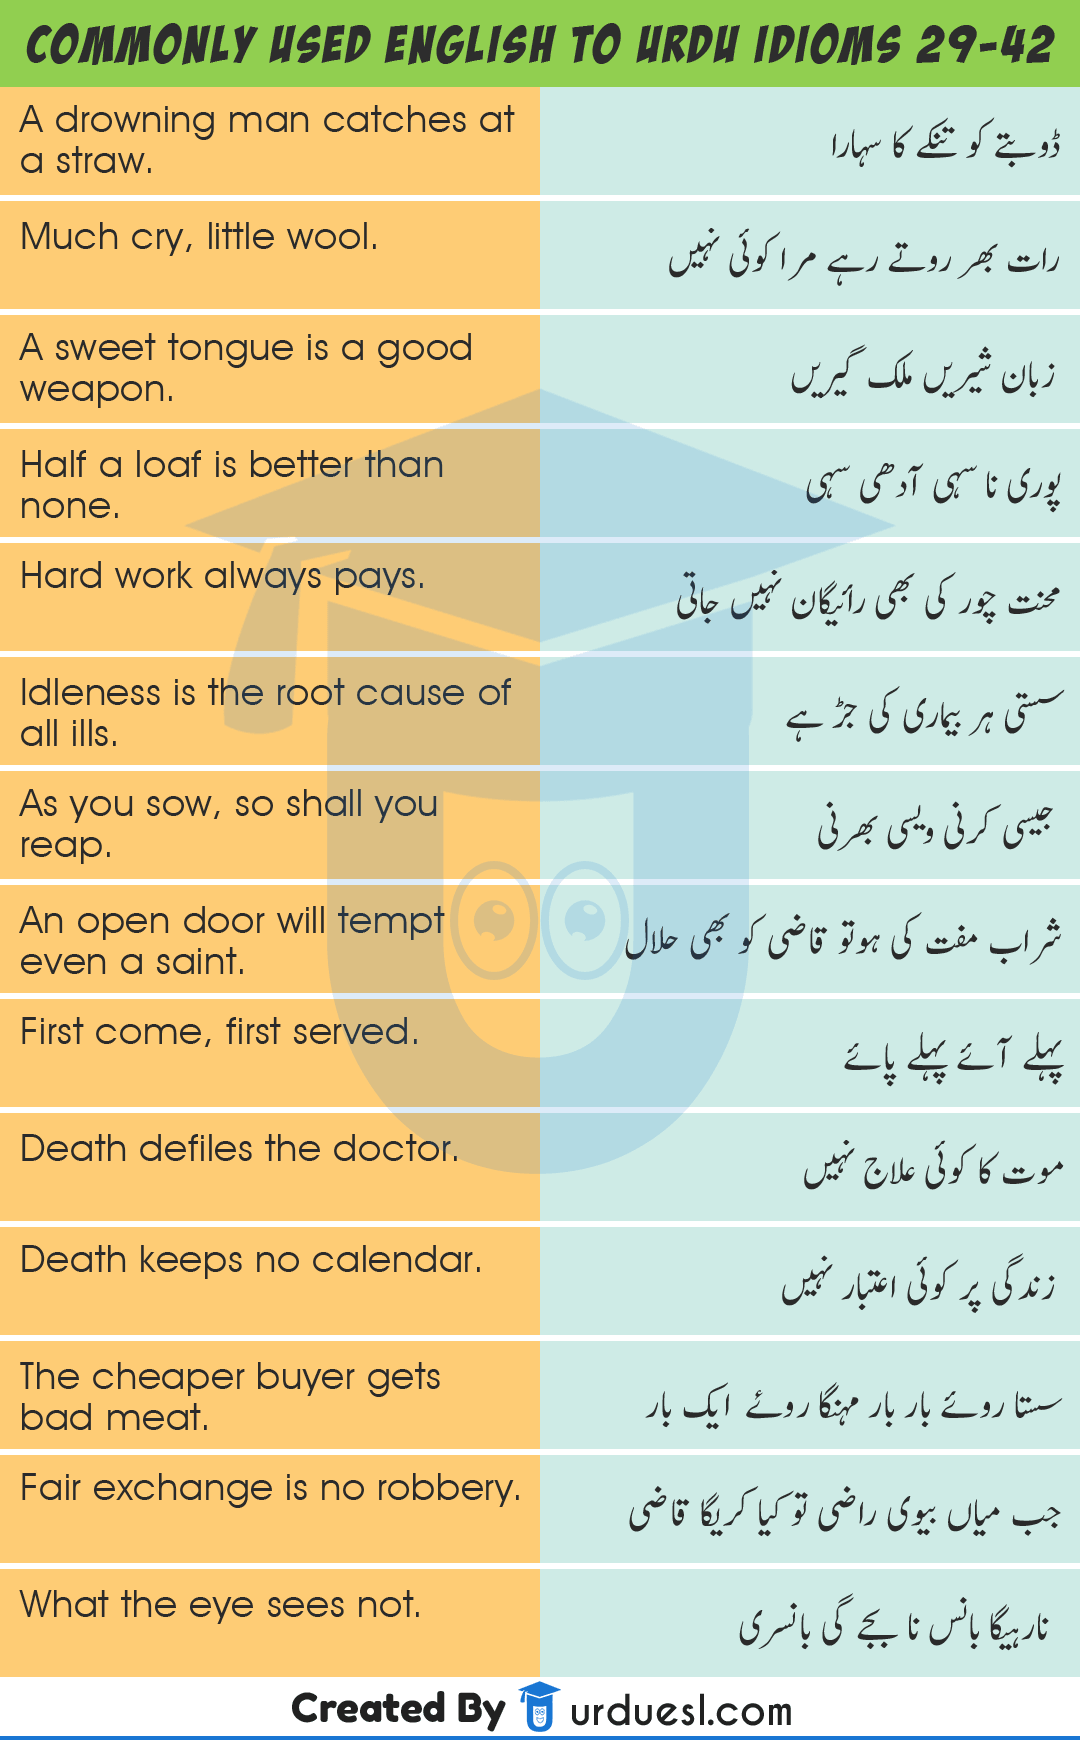 timely manner meaning in urdu